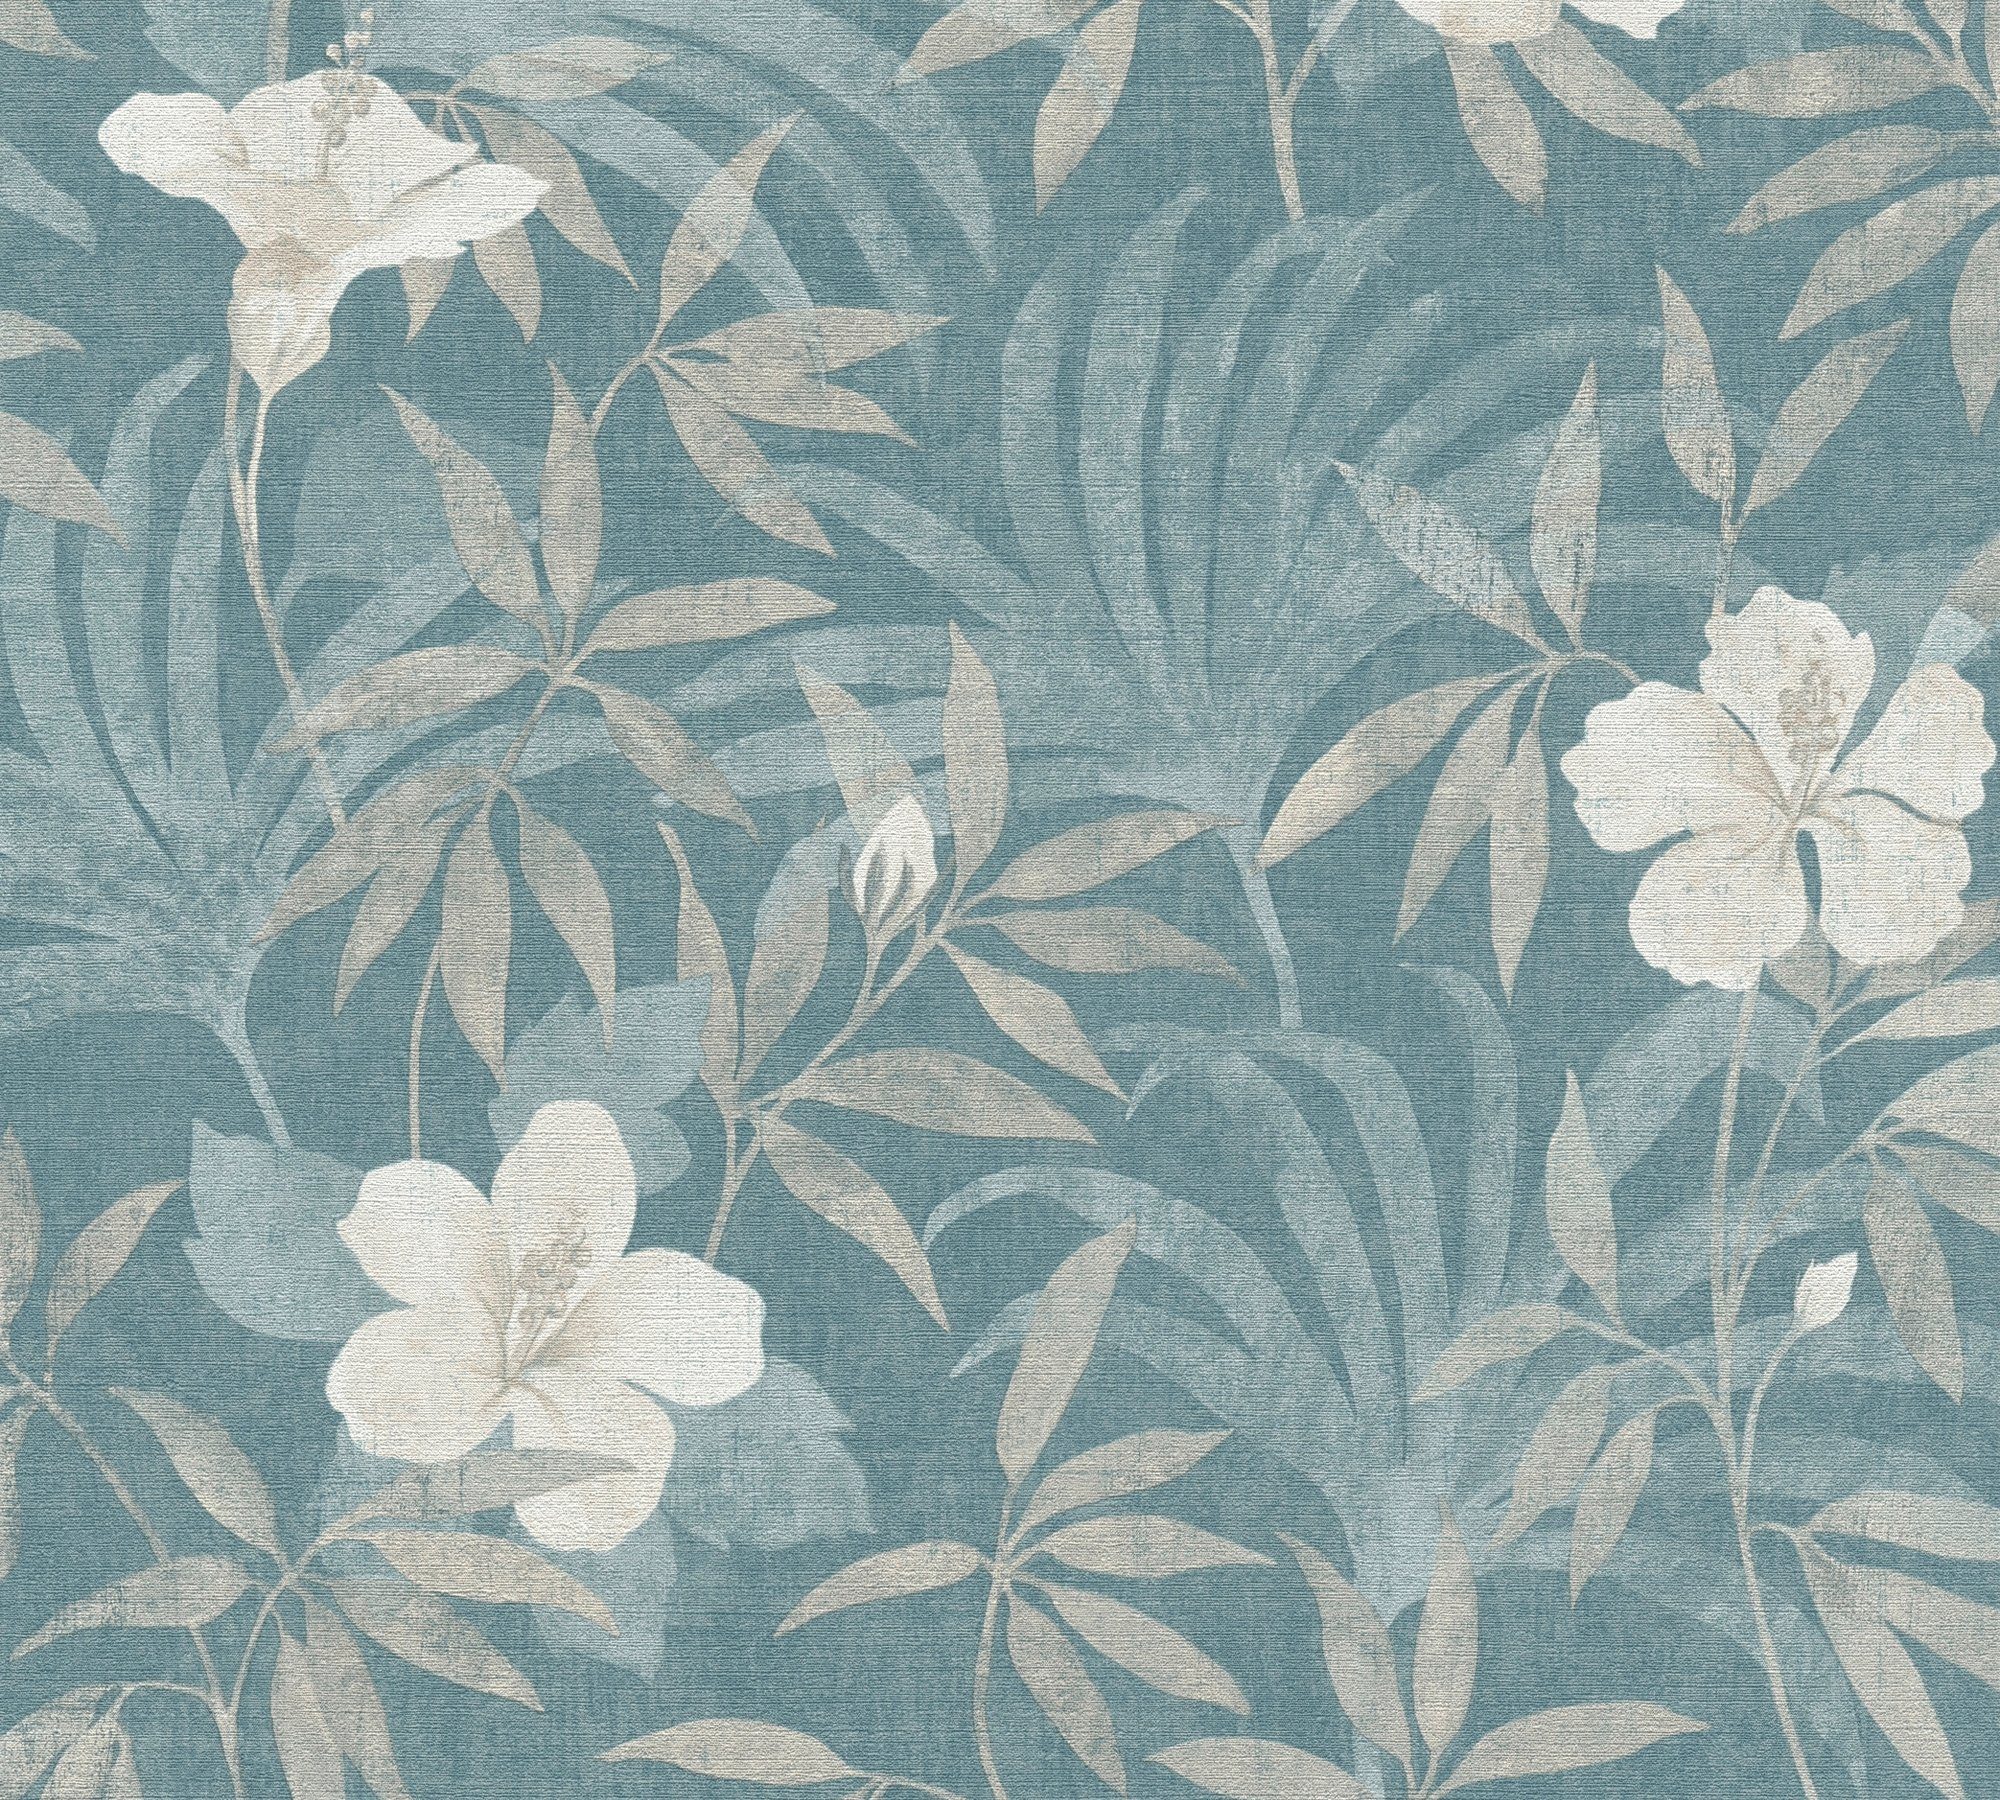 Dschungeltapete floral, Blumen Cuba, Création Tapete beige/blau tropisch, A.S. Vliestapete botanisch,